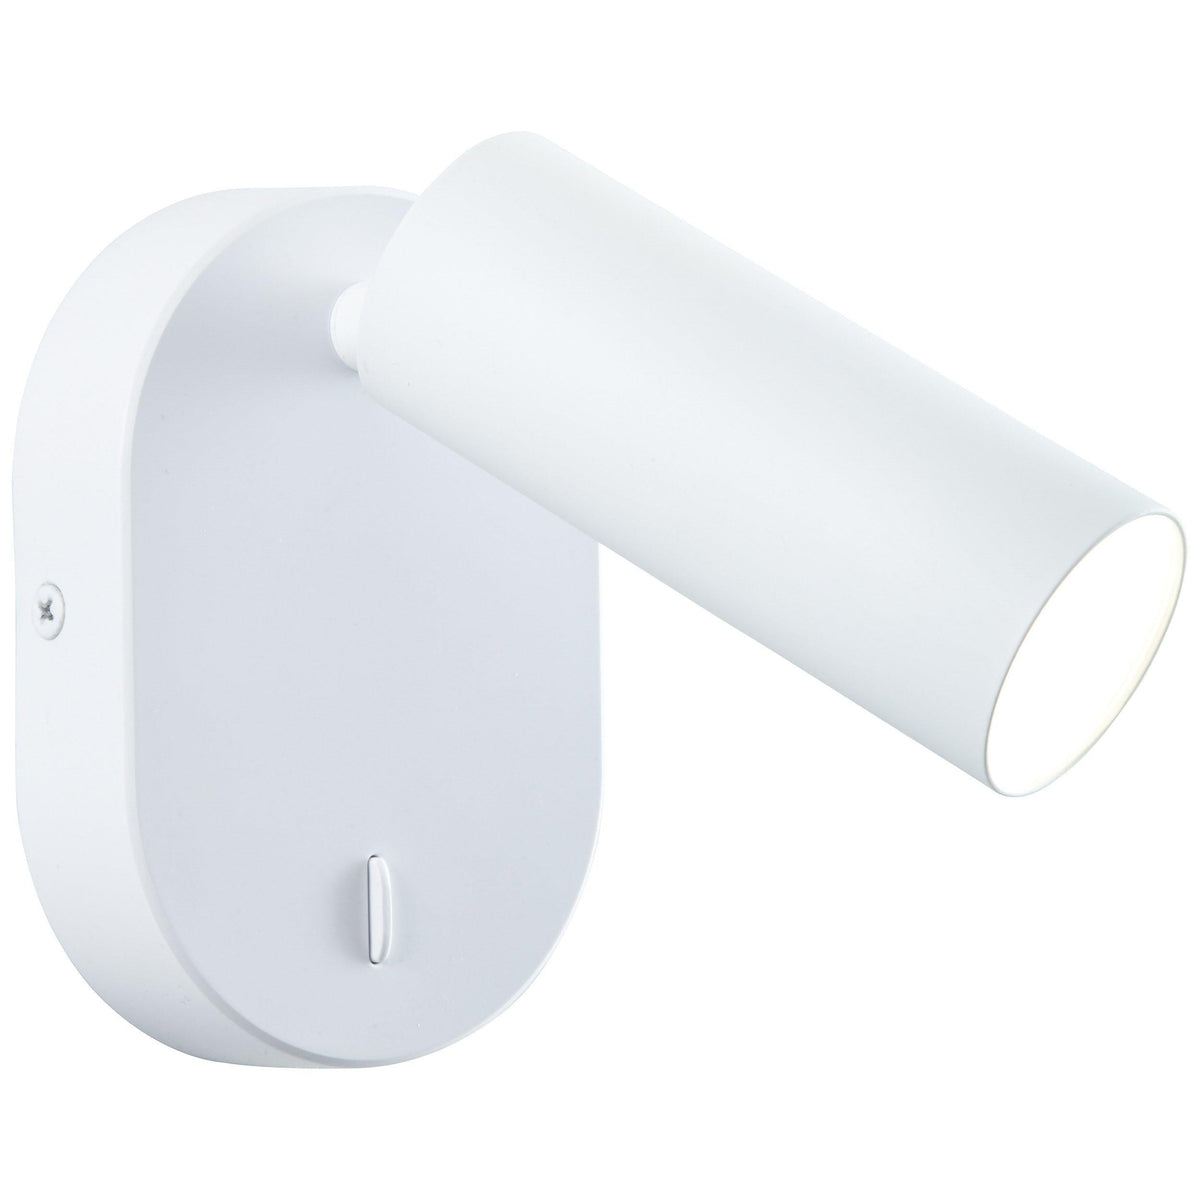 Brilliant 1 Light 4.5W Soeren LED Wall Spotlight - White Matt | G83010/05 from DID Electrical - guaranteed Irish, guaranteed quality service. (6977609334972)